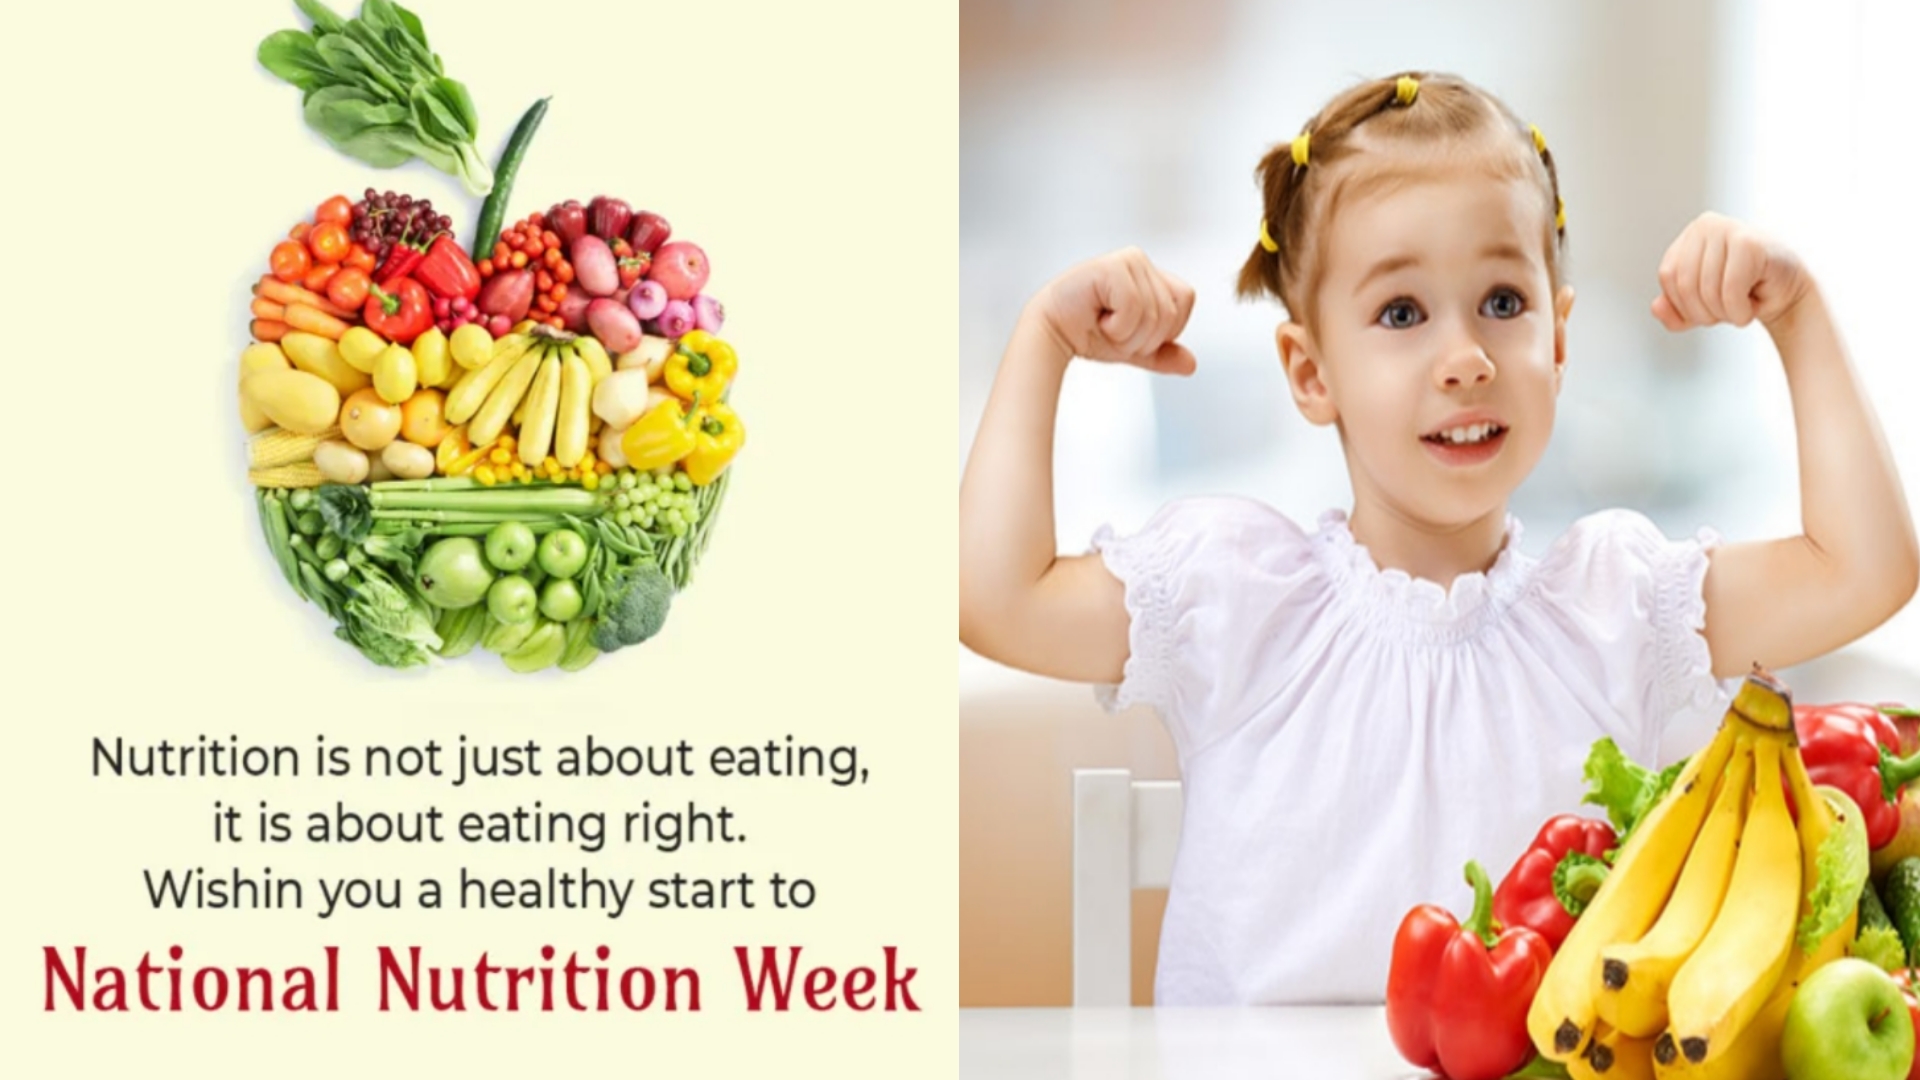 National Nutrition Week 2022